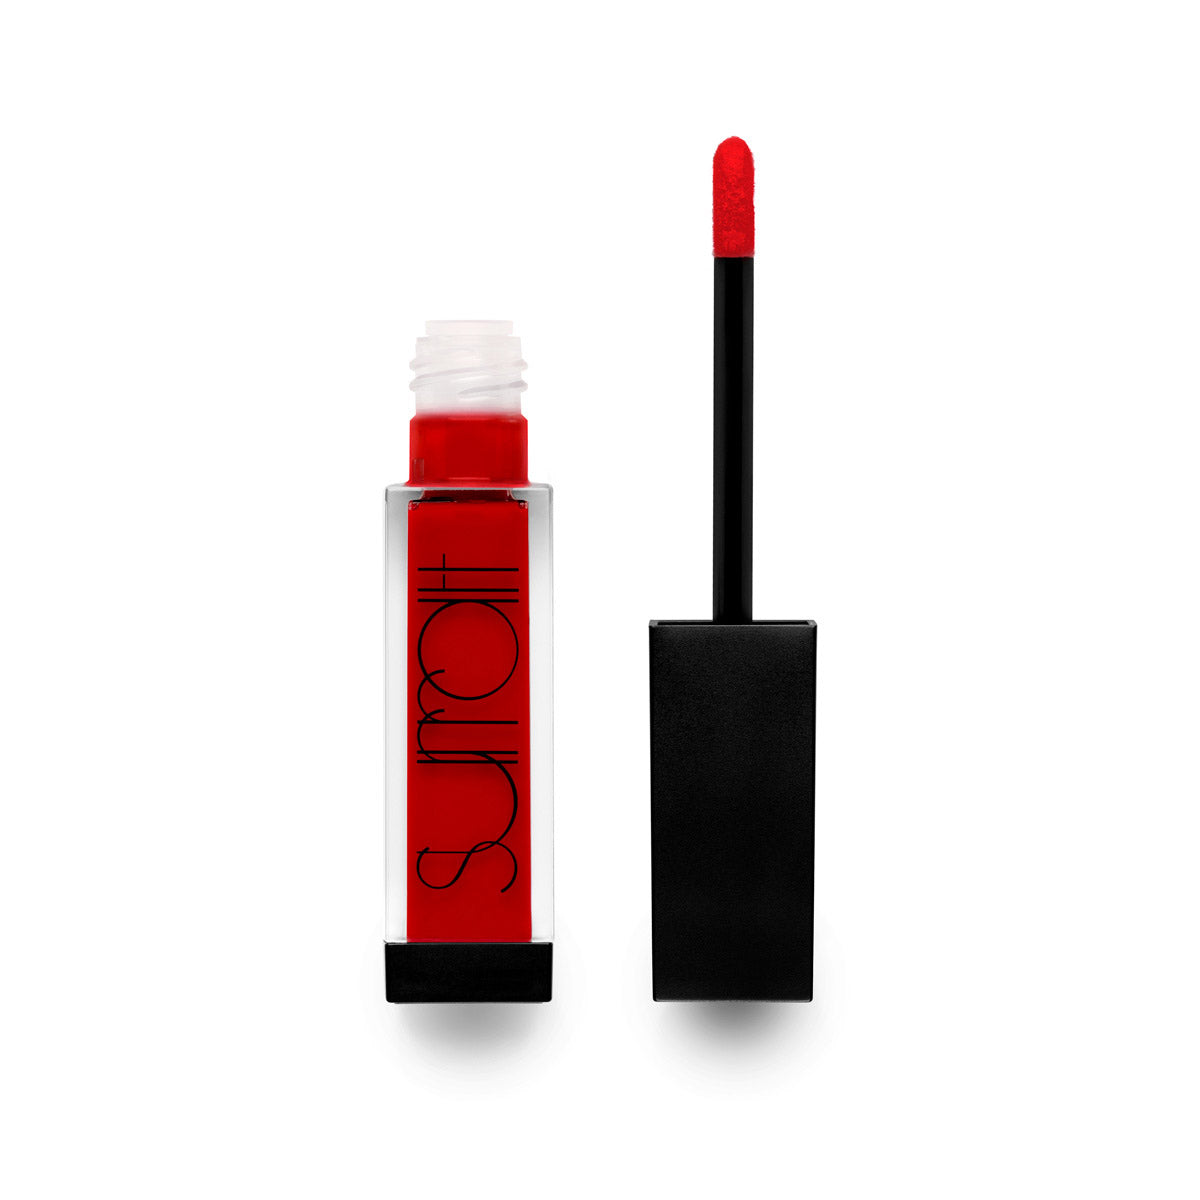 BON VIVANT - ORANGEY RED - opaque red lip gloss